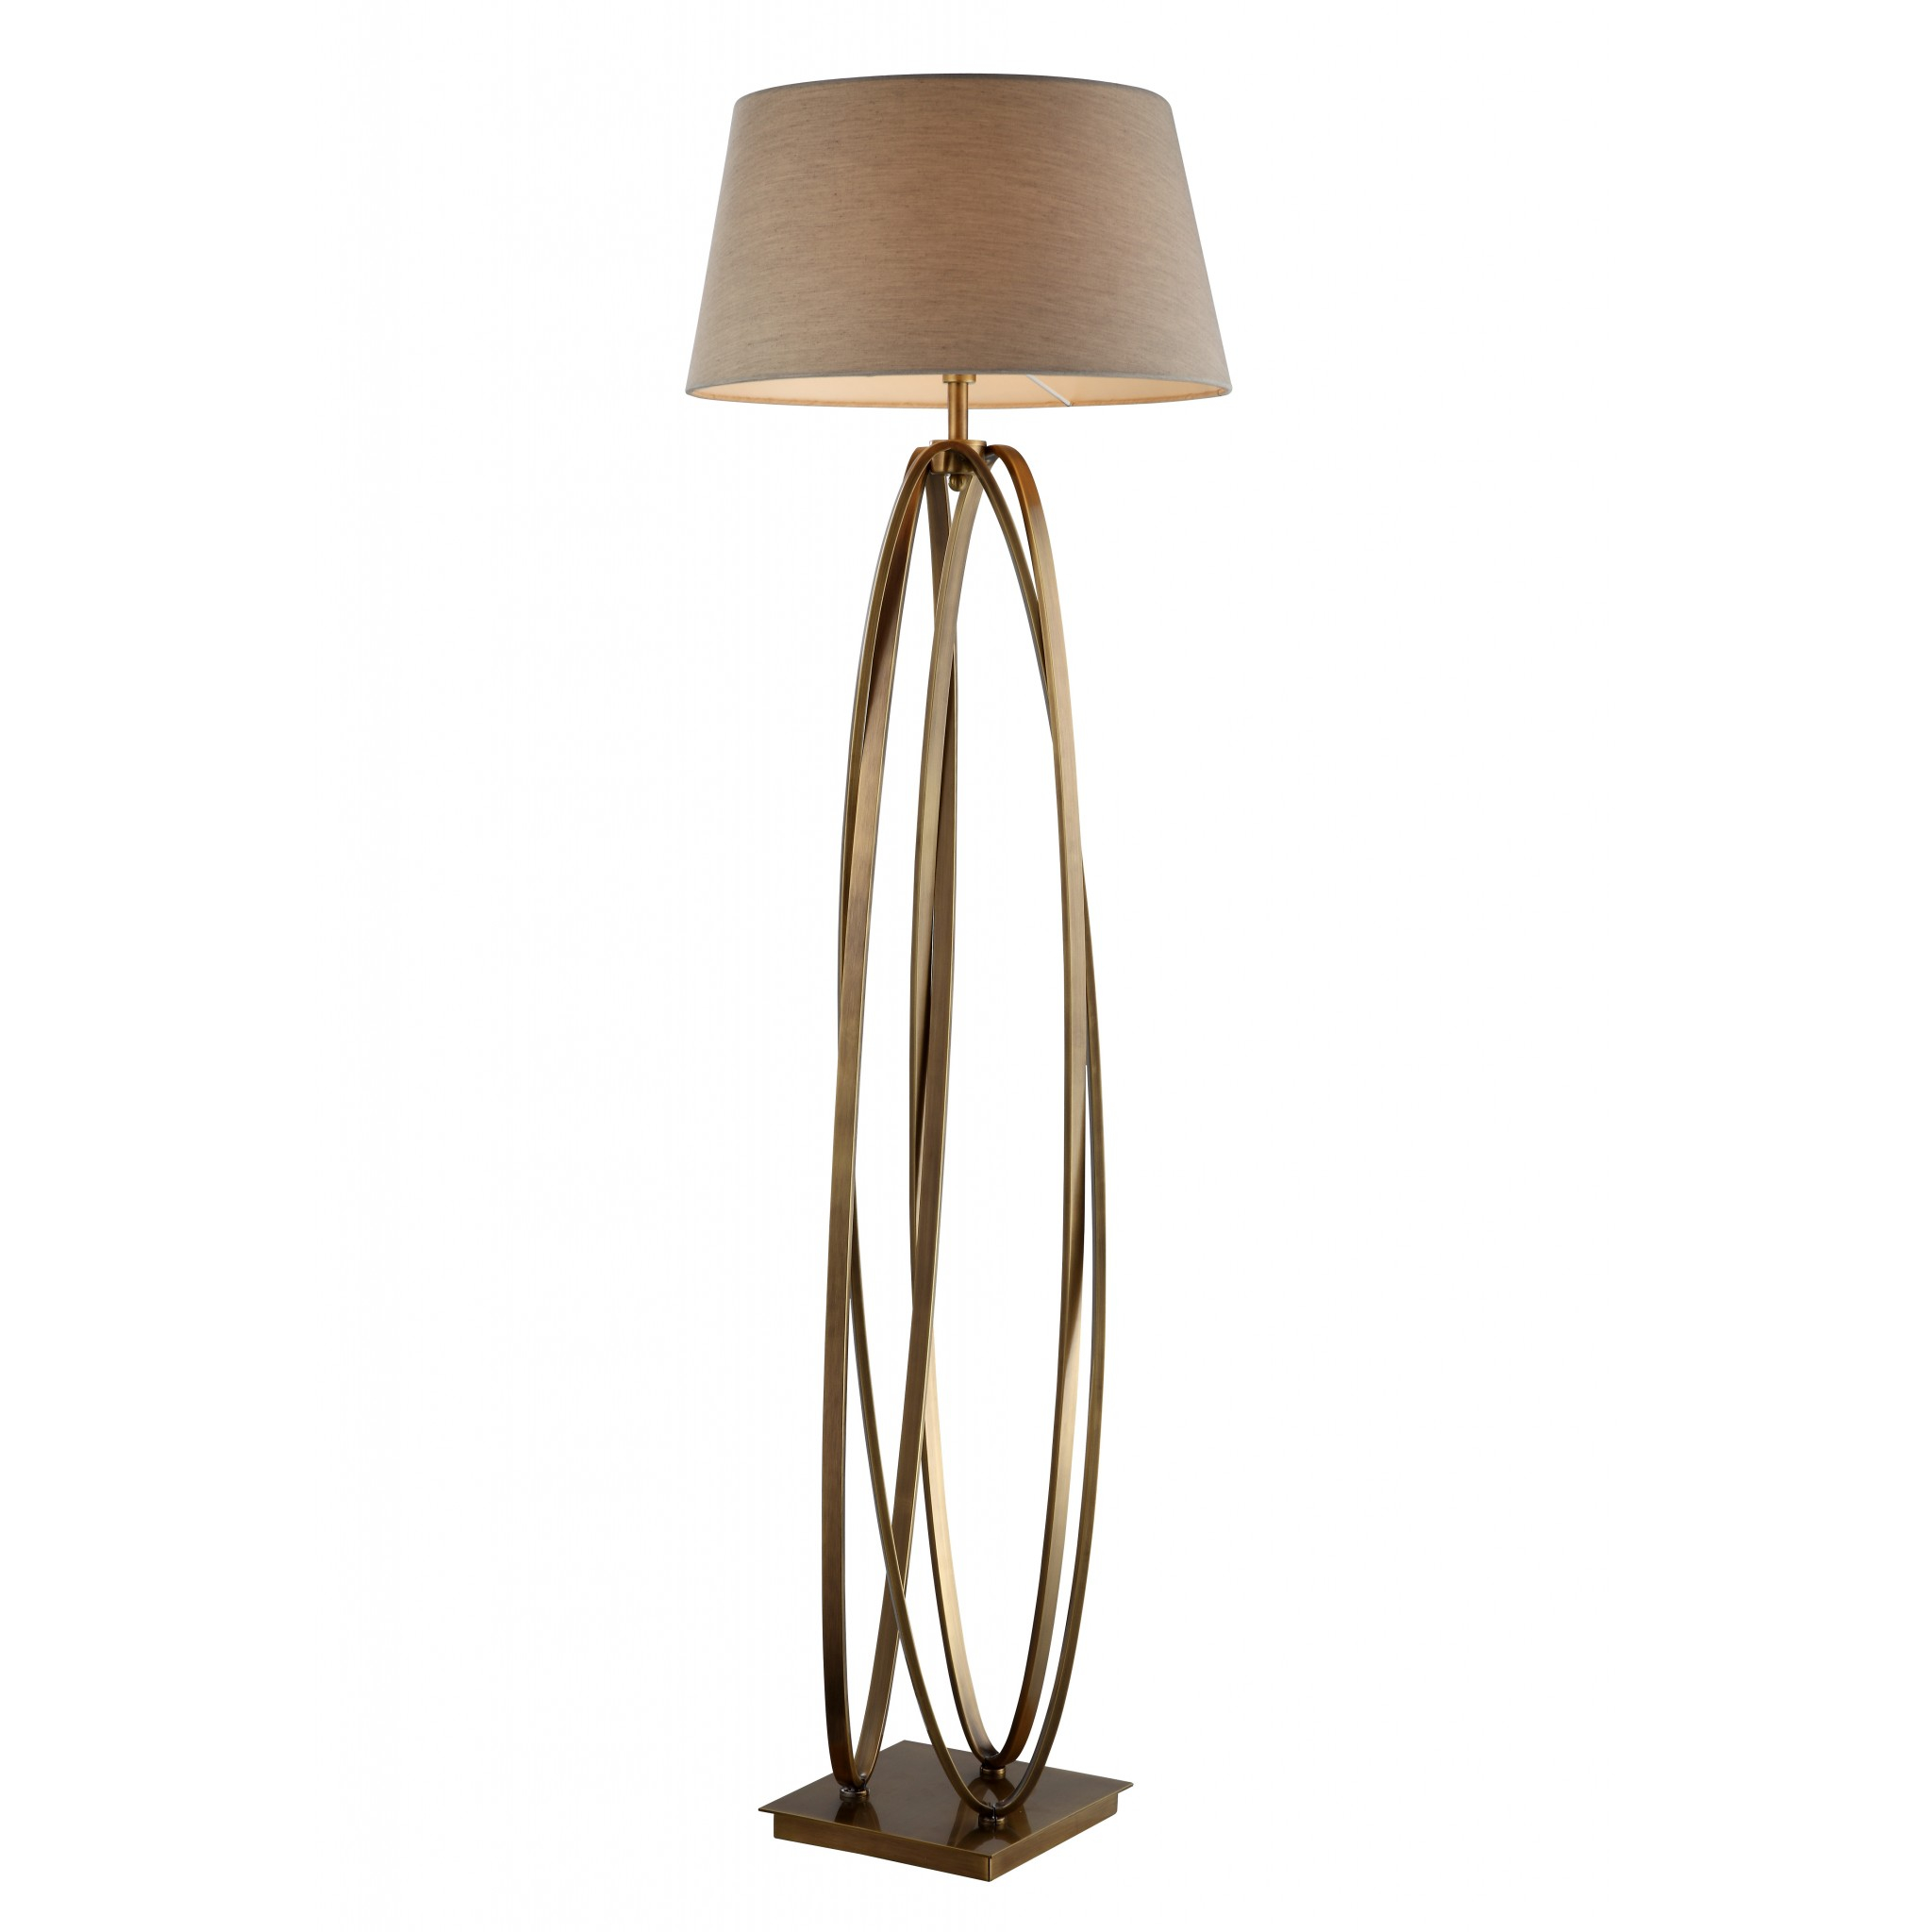 Lamp Vintage Torchiere Floor Lamp Inspirational Floor Lamps regarding sizing 2048 X 2048